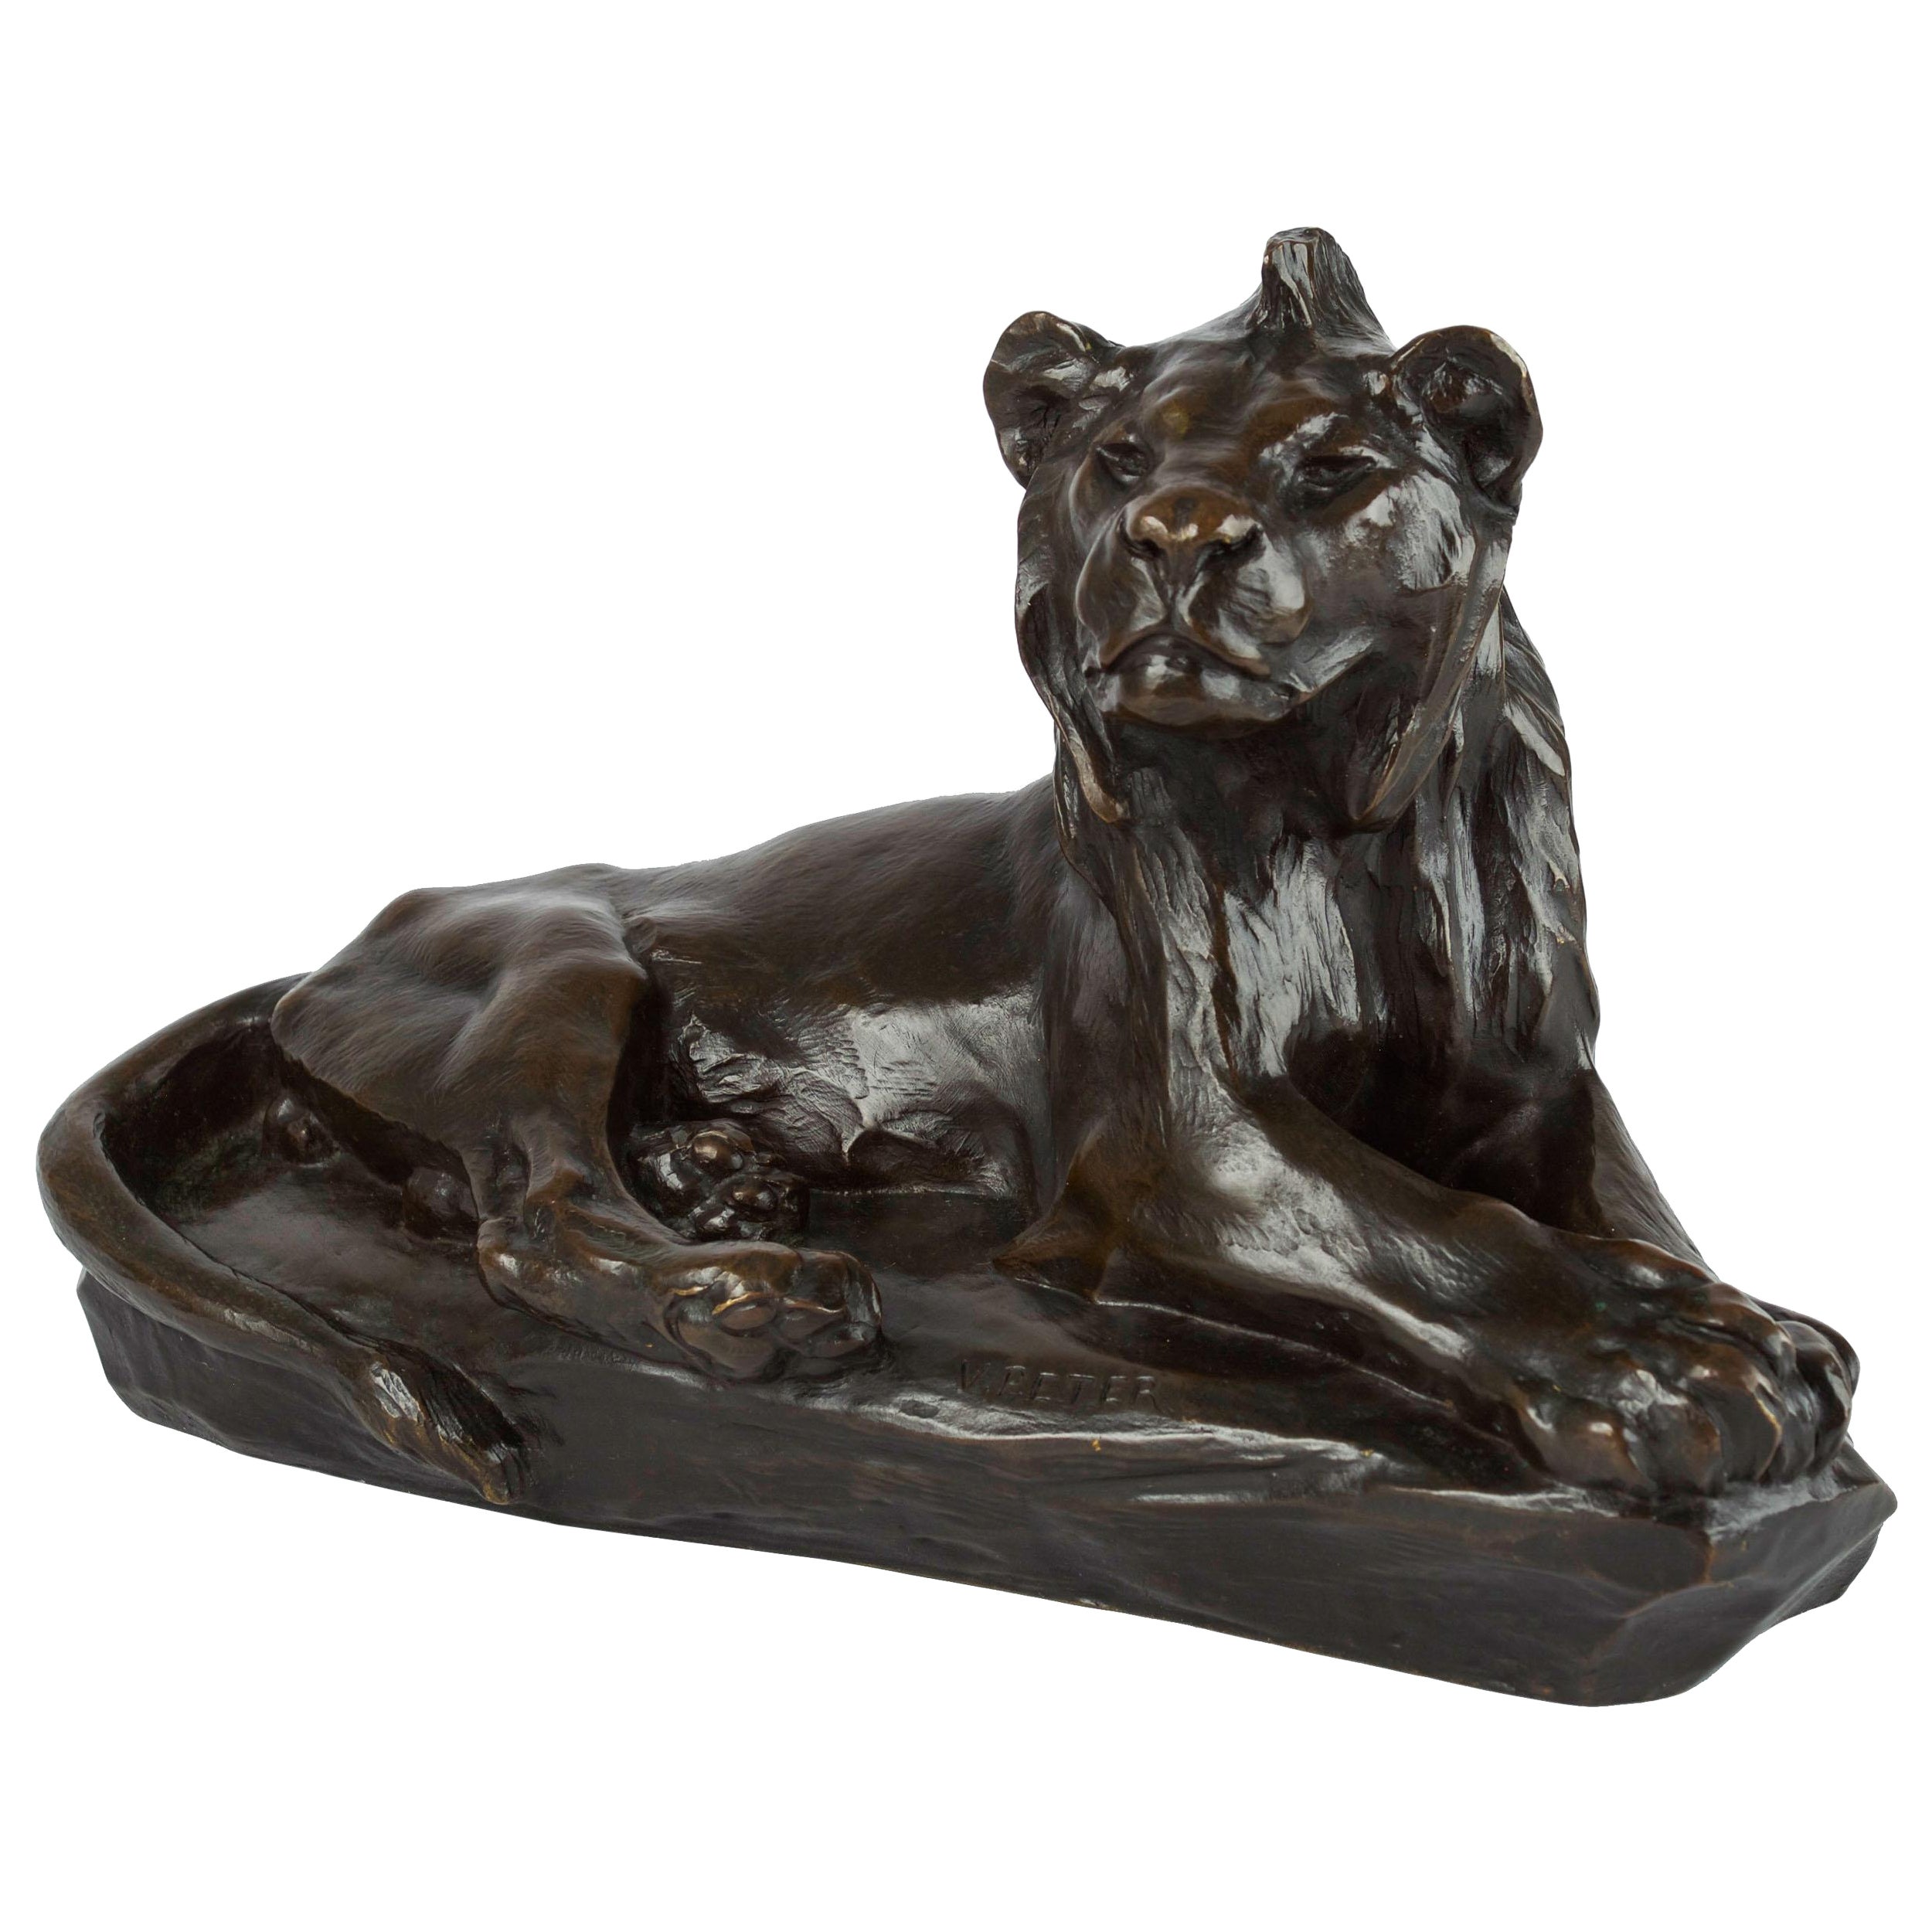 Antique French Bronze Sculpture "Lion Cub of Atlas" Victor Peter & Susse Freres